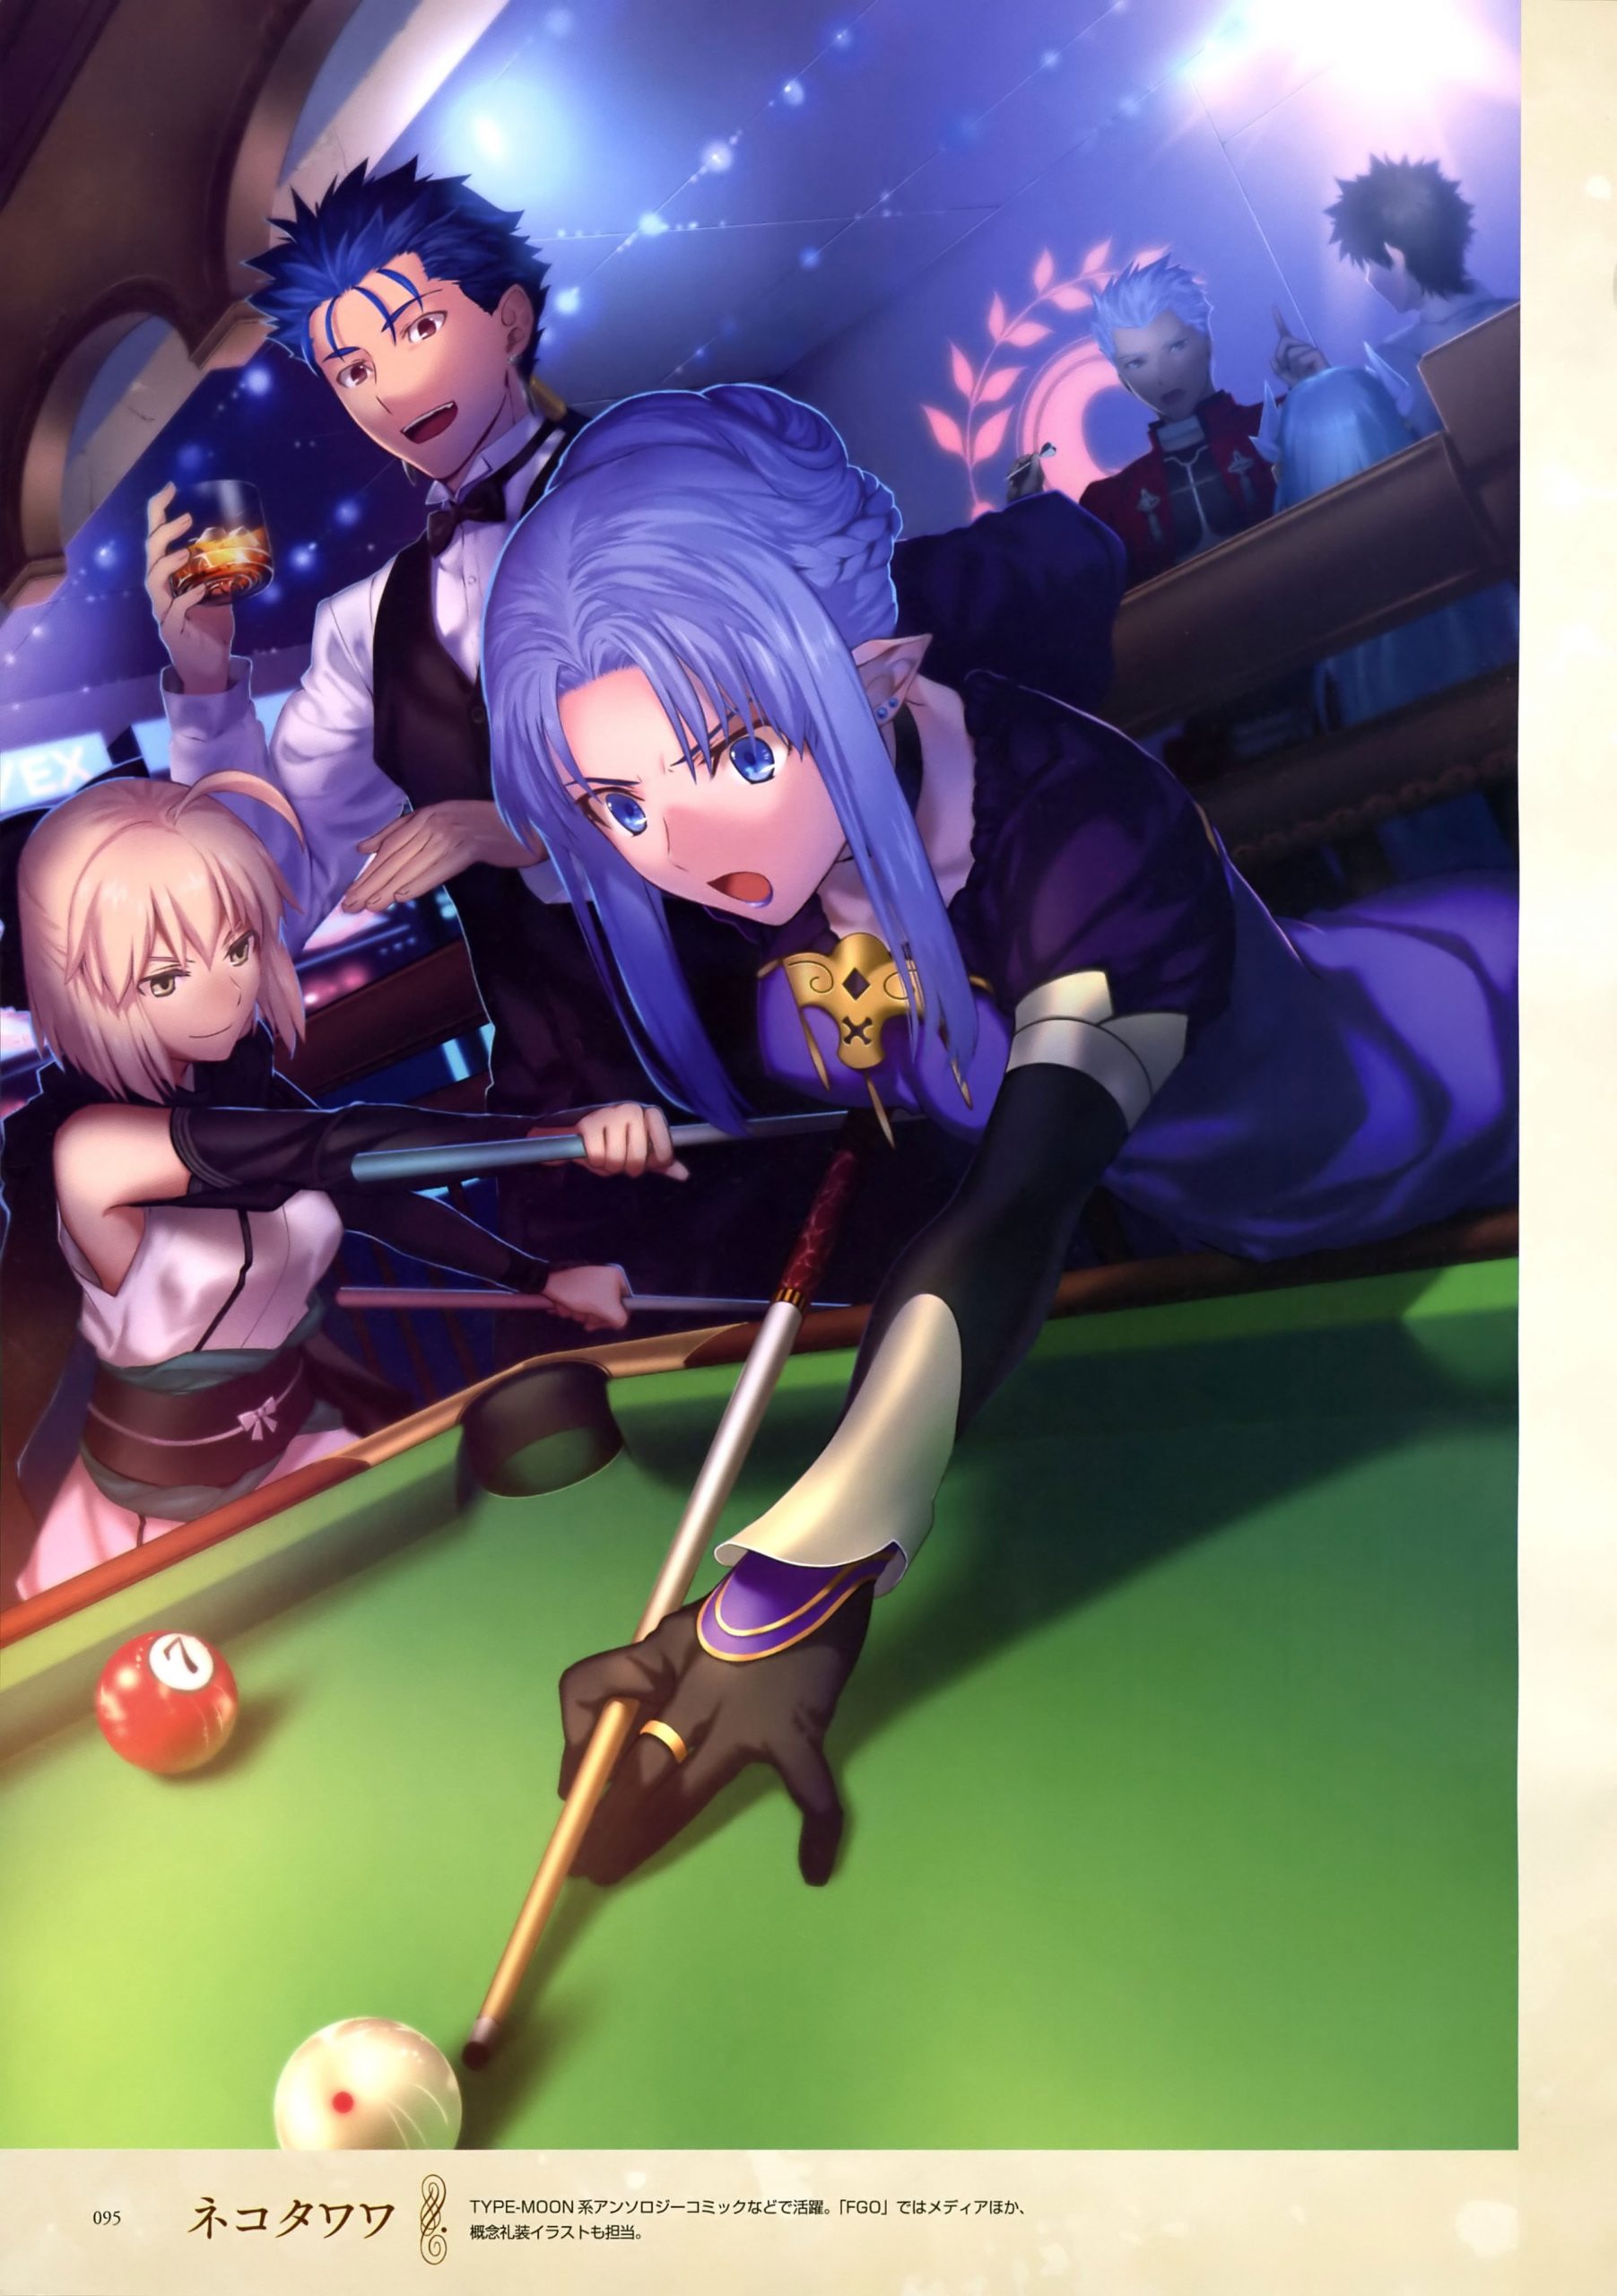 Wallpaper Emiya Shirou Blue Haired Woman Playing